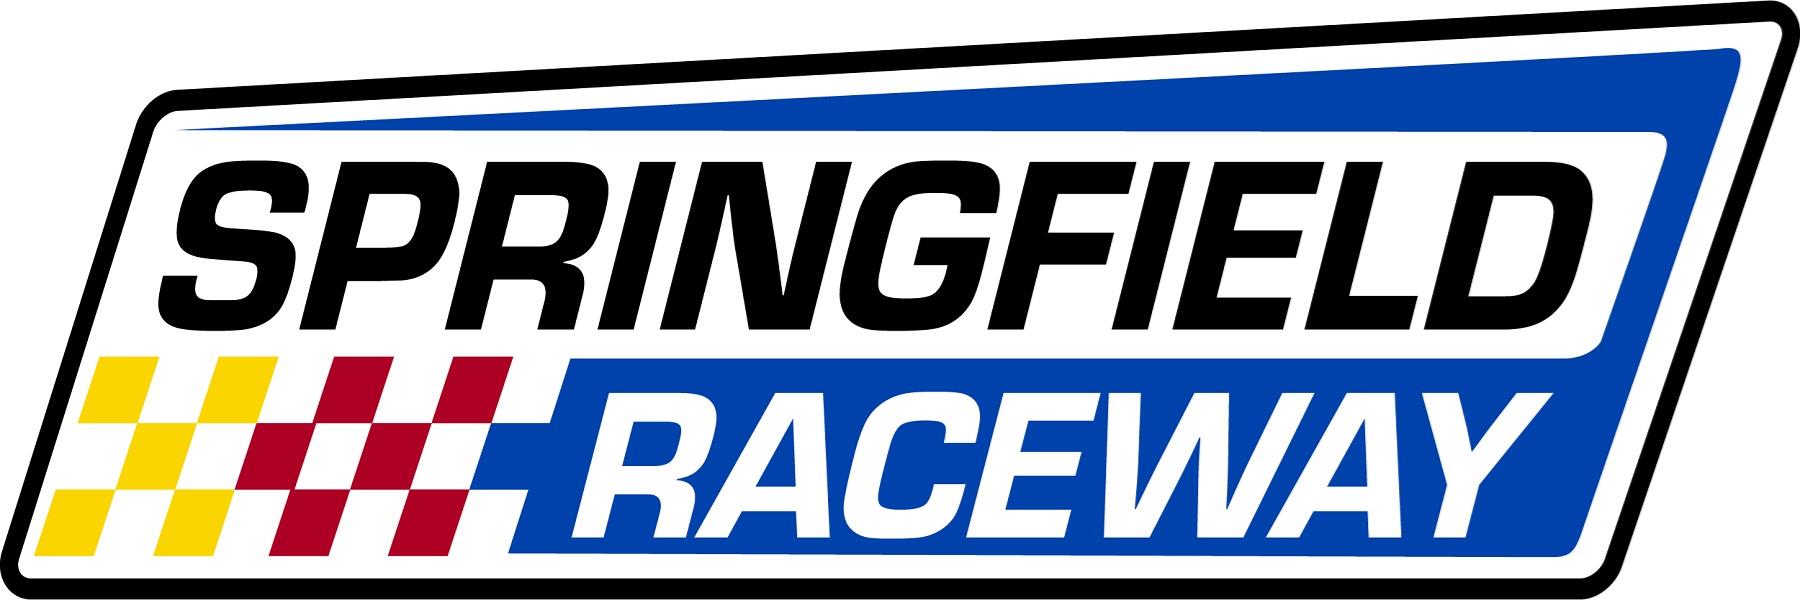 10/8/2022 - Springfield Raceway